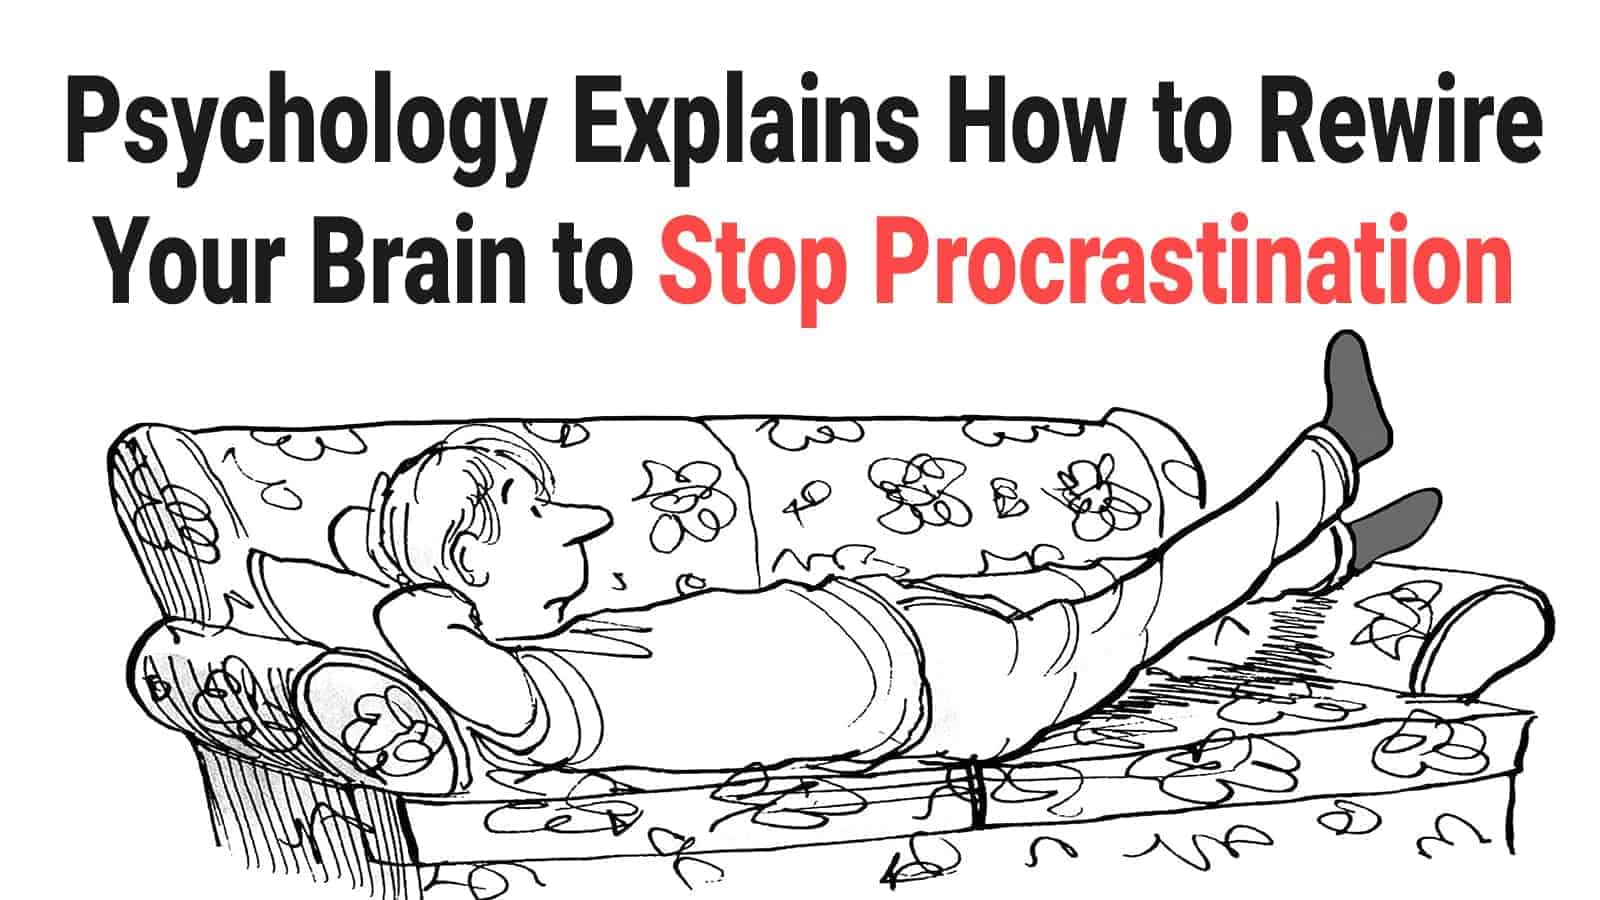 Psychology Explains How to Rewire Your Brain to Stop Procrastination